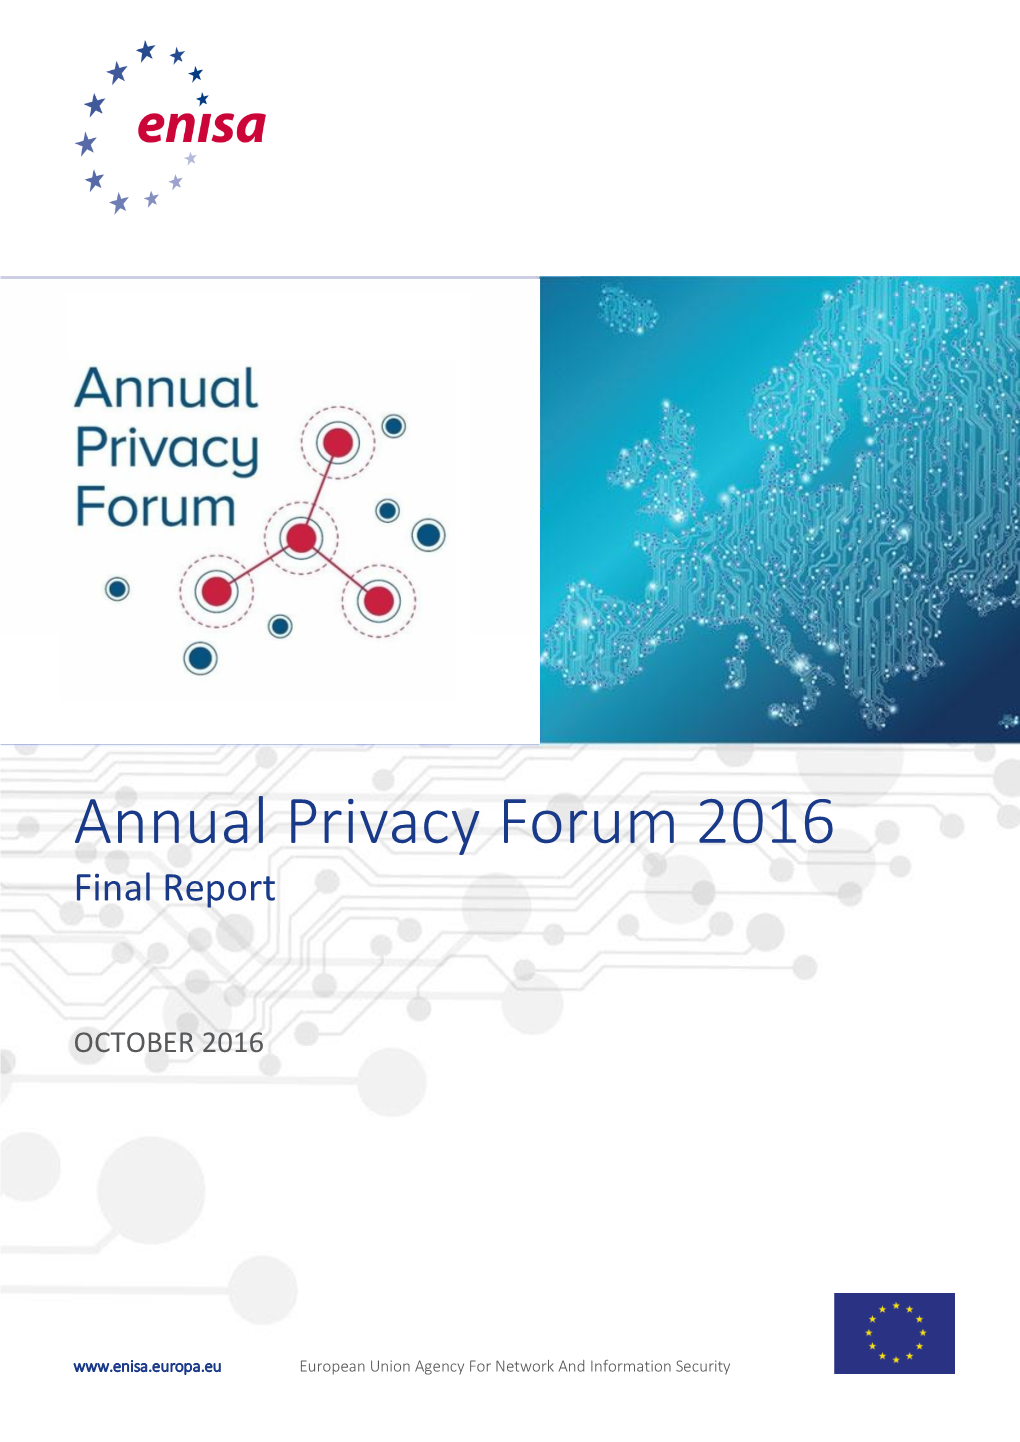 Annual Privacy Forum 2016 Final Report